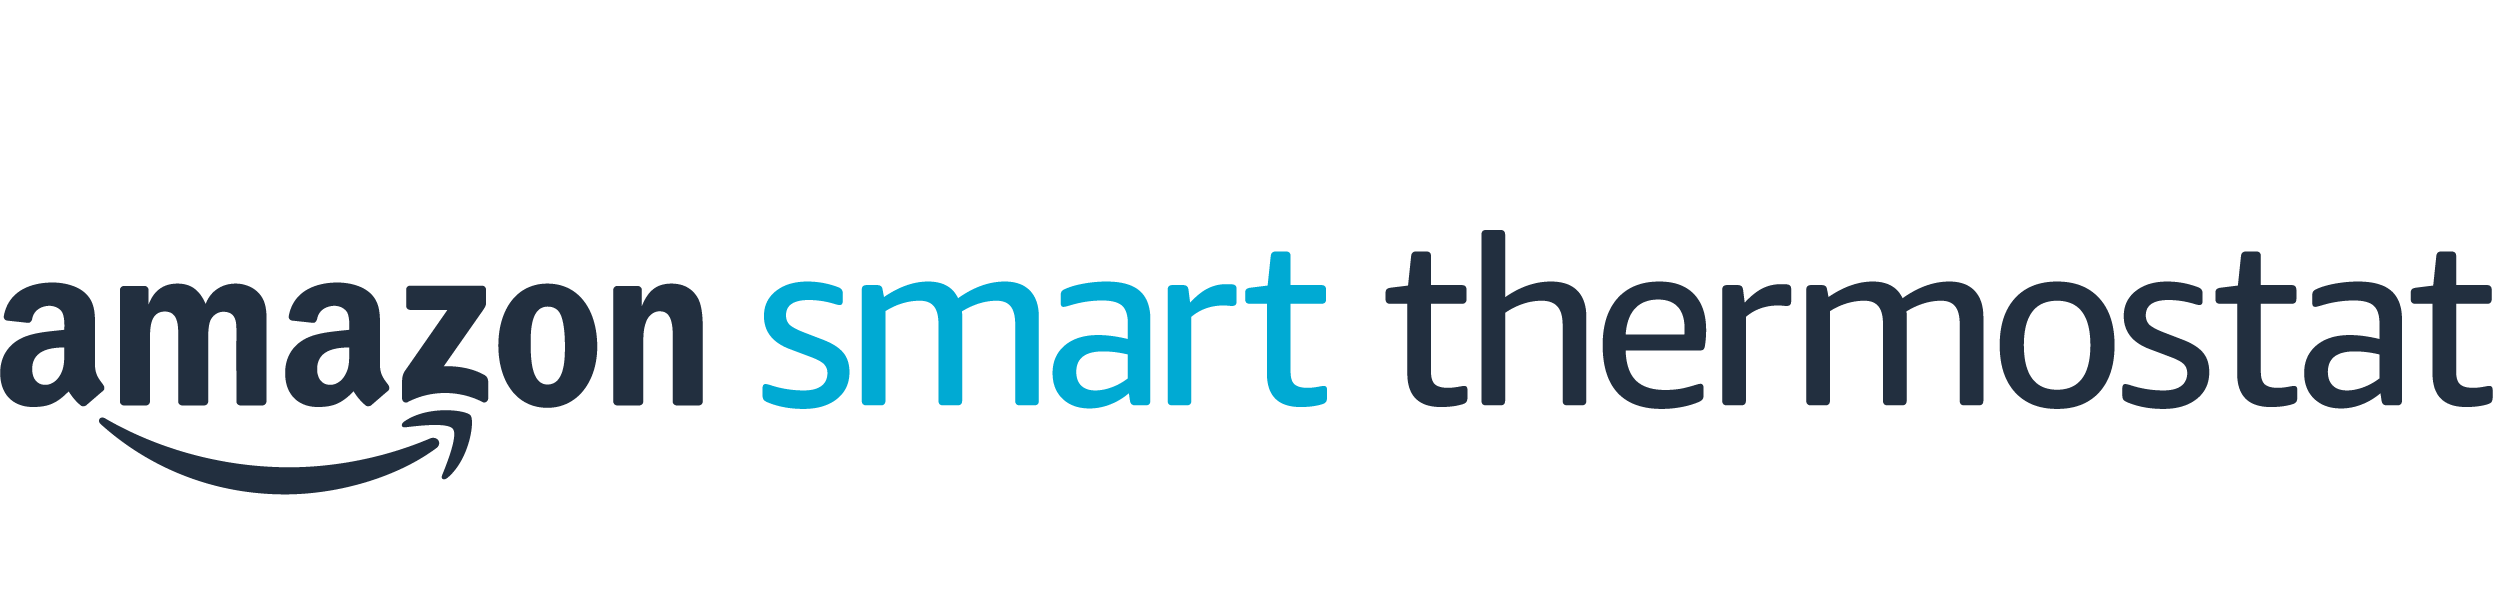 Amazon Smart Thermostat logo